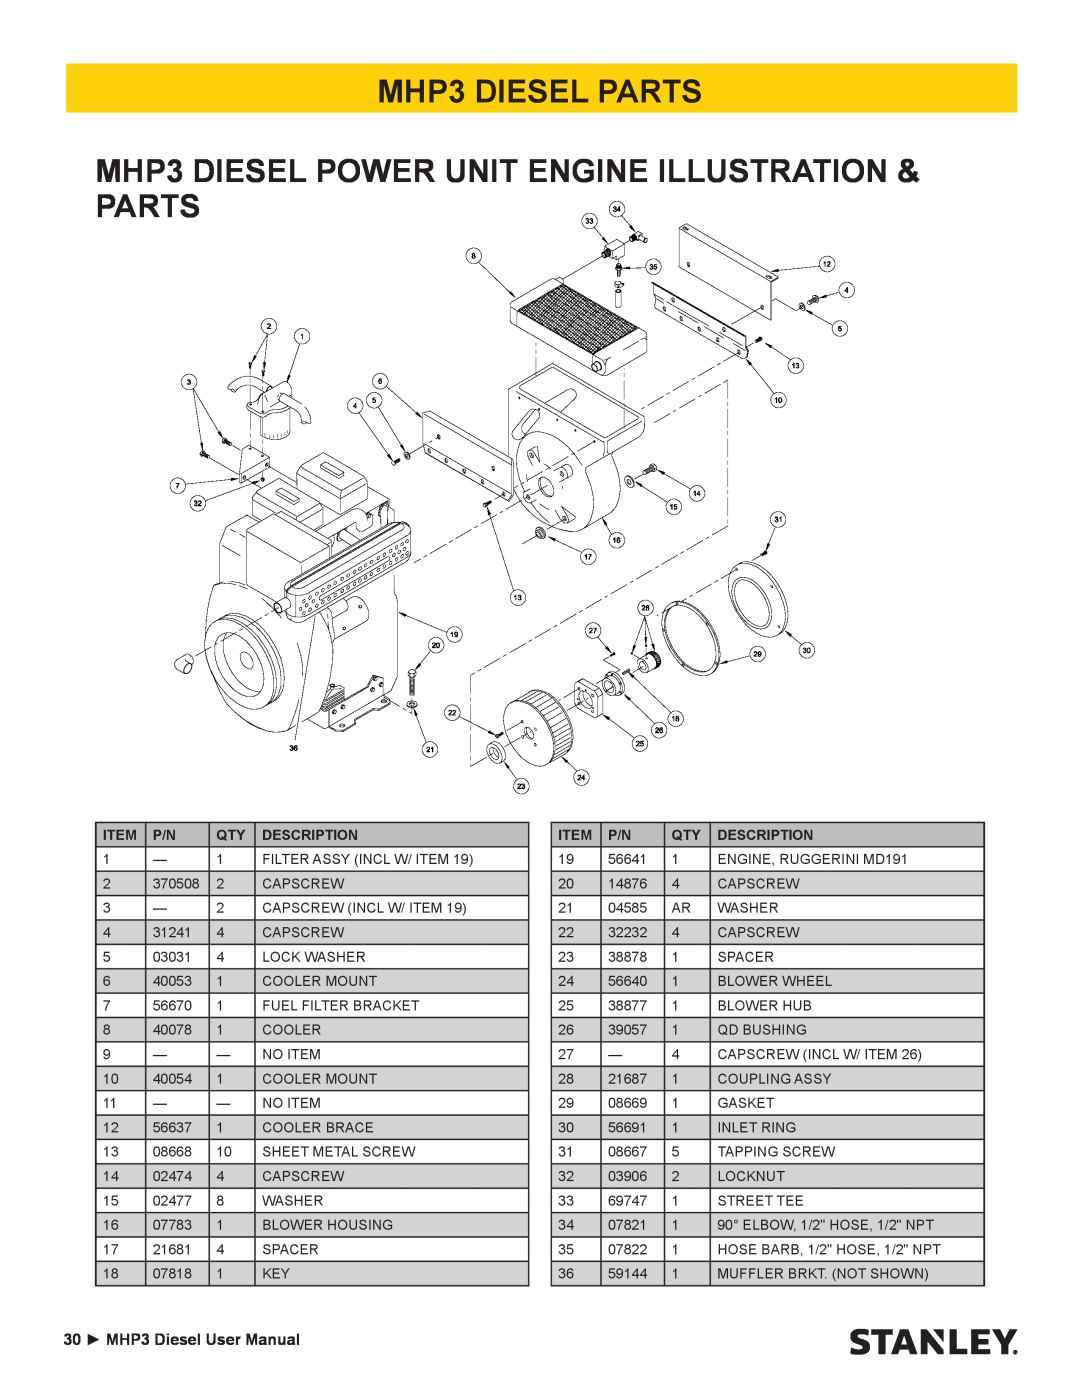 Stanley Black & Decker manual MHP3 DIESEL PARTS MHP3 DIESEL POWER UNIT ENGINE ILLUSTRATION & PARTS 